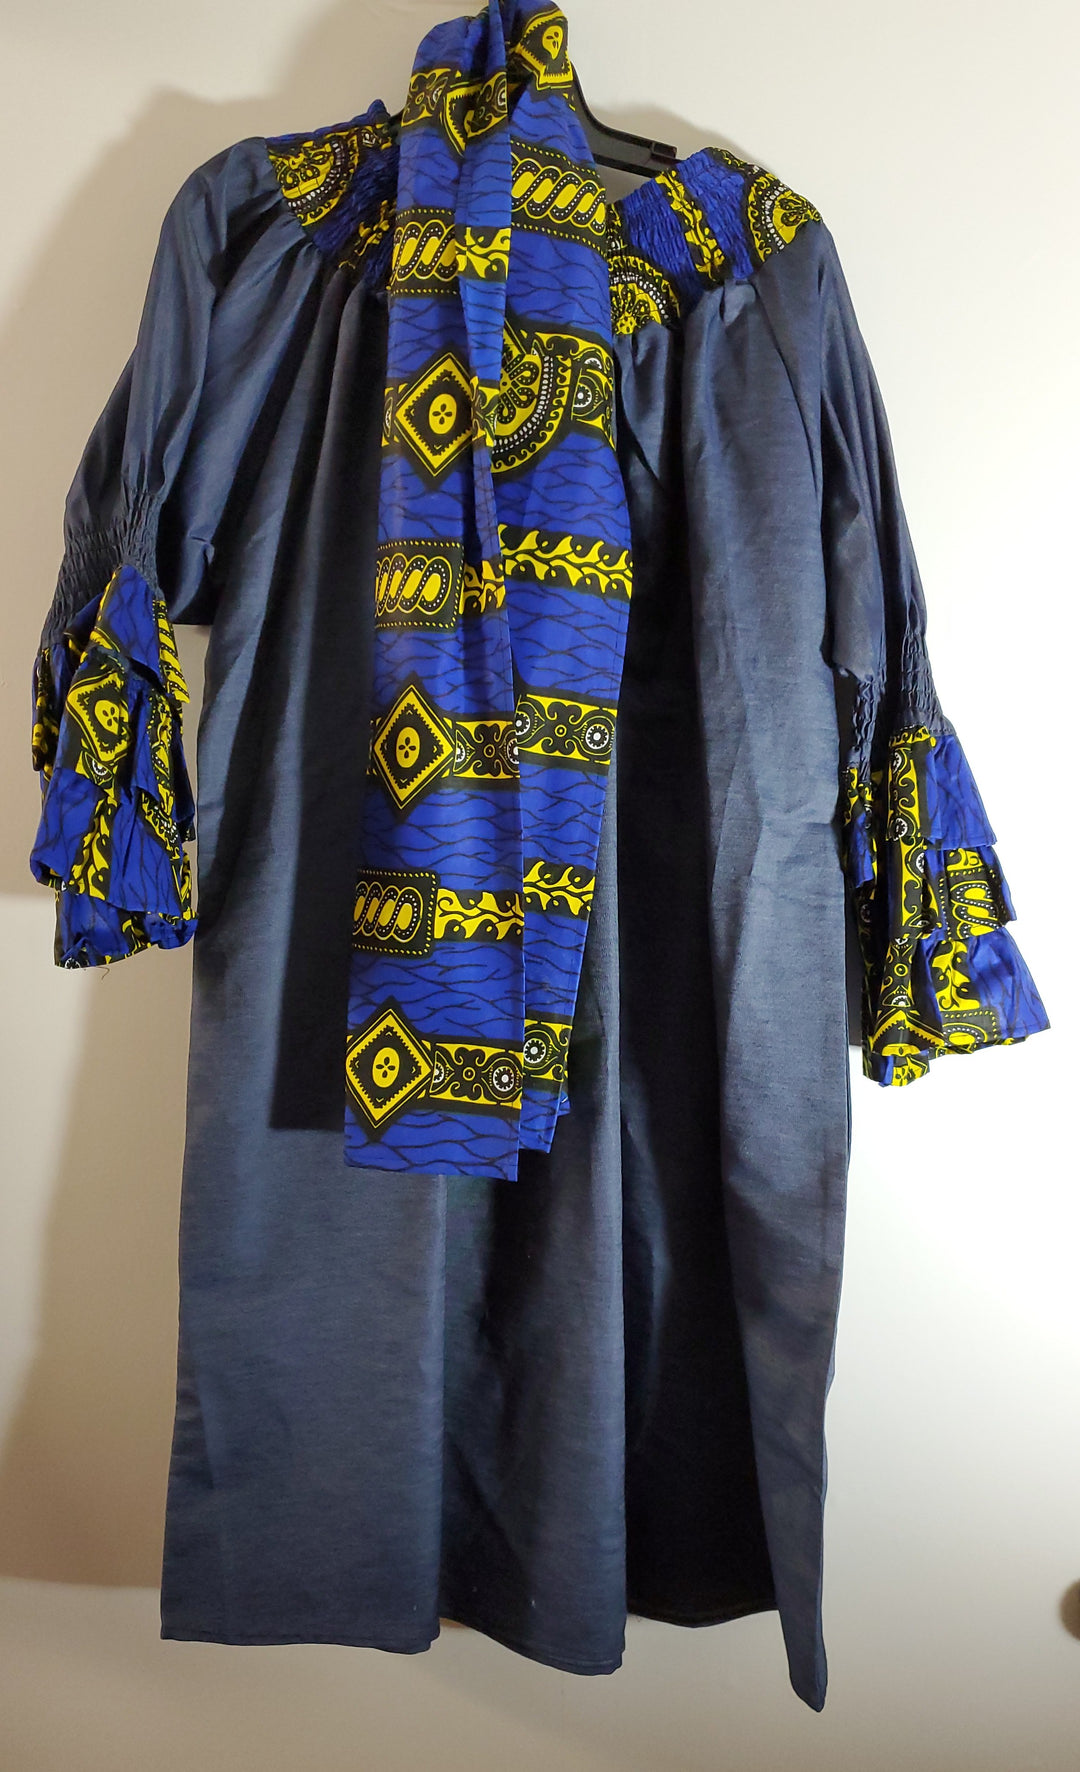 Ladies African Yellow/Blue Print Denim Dress